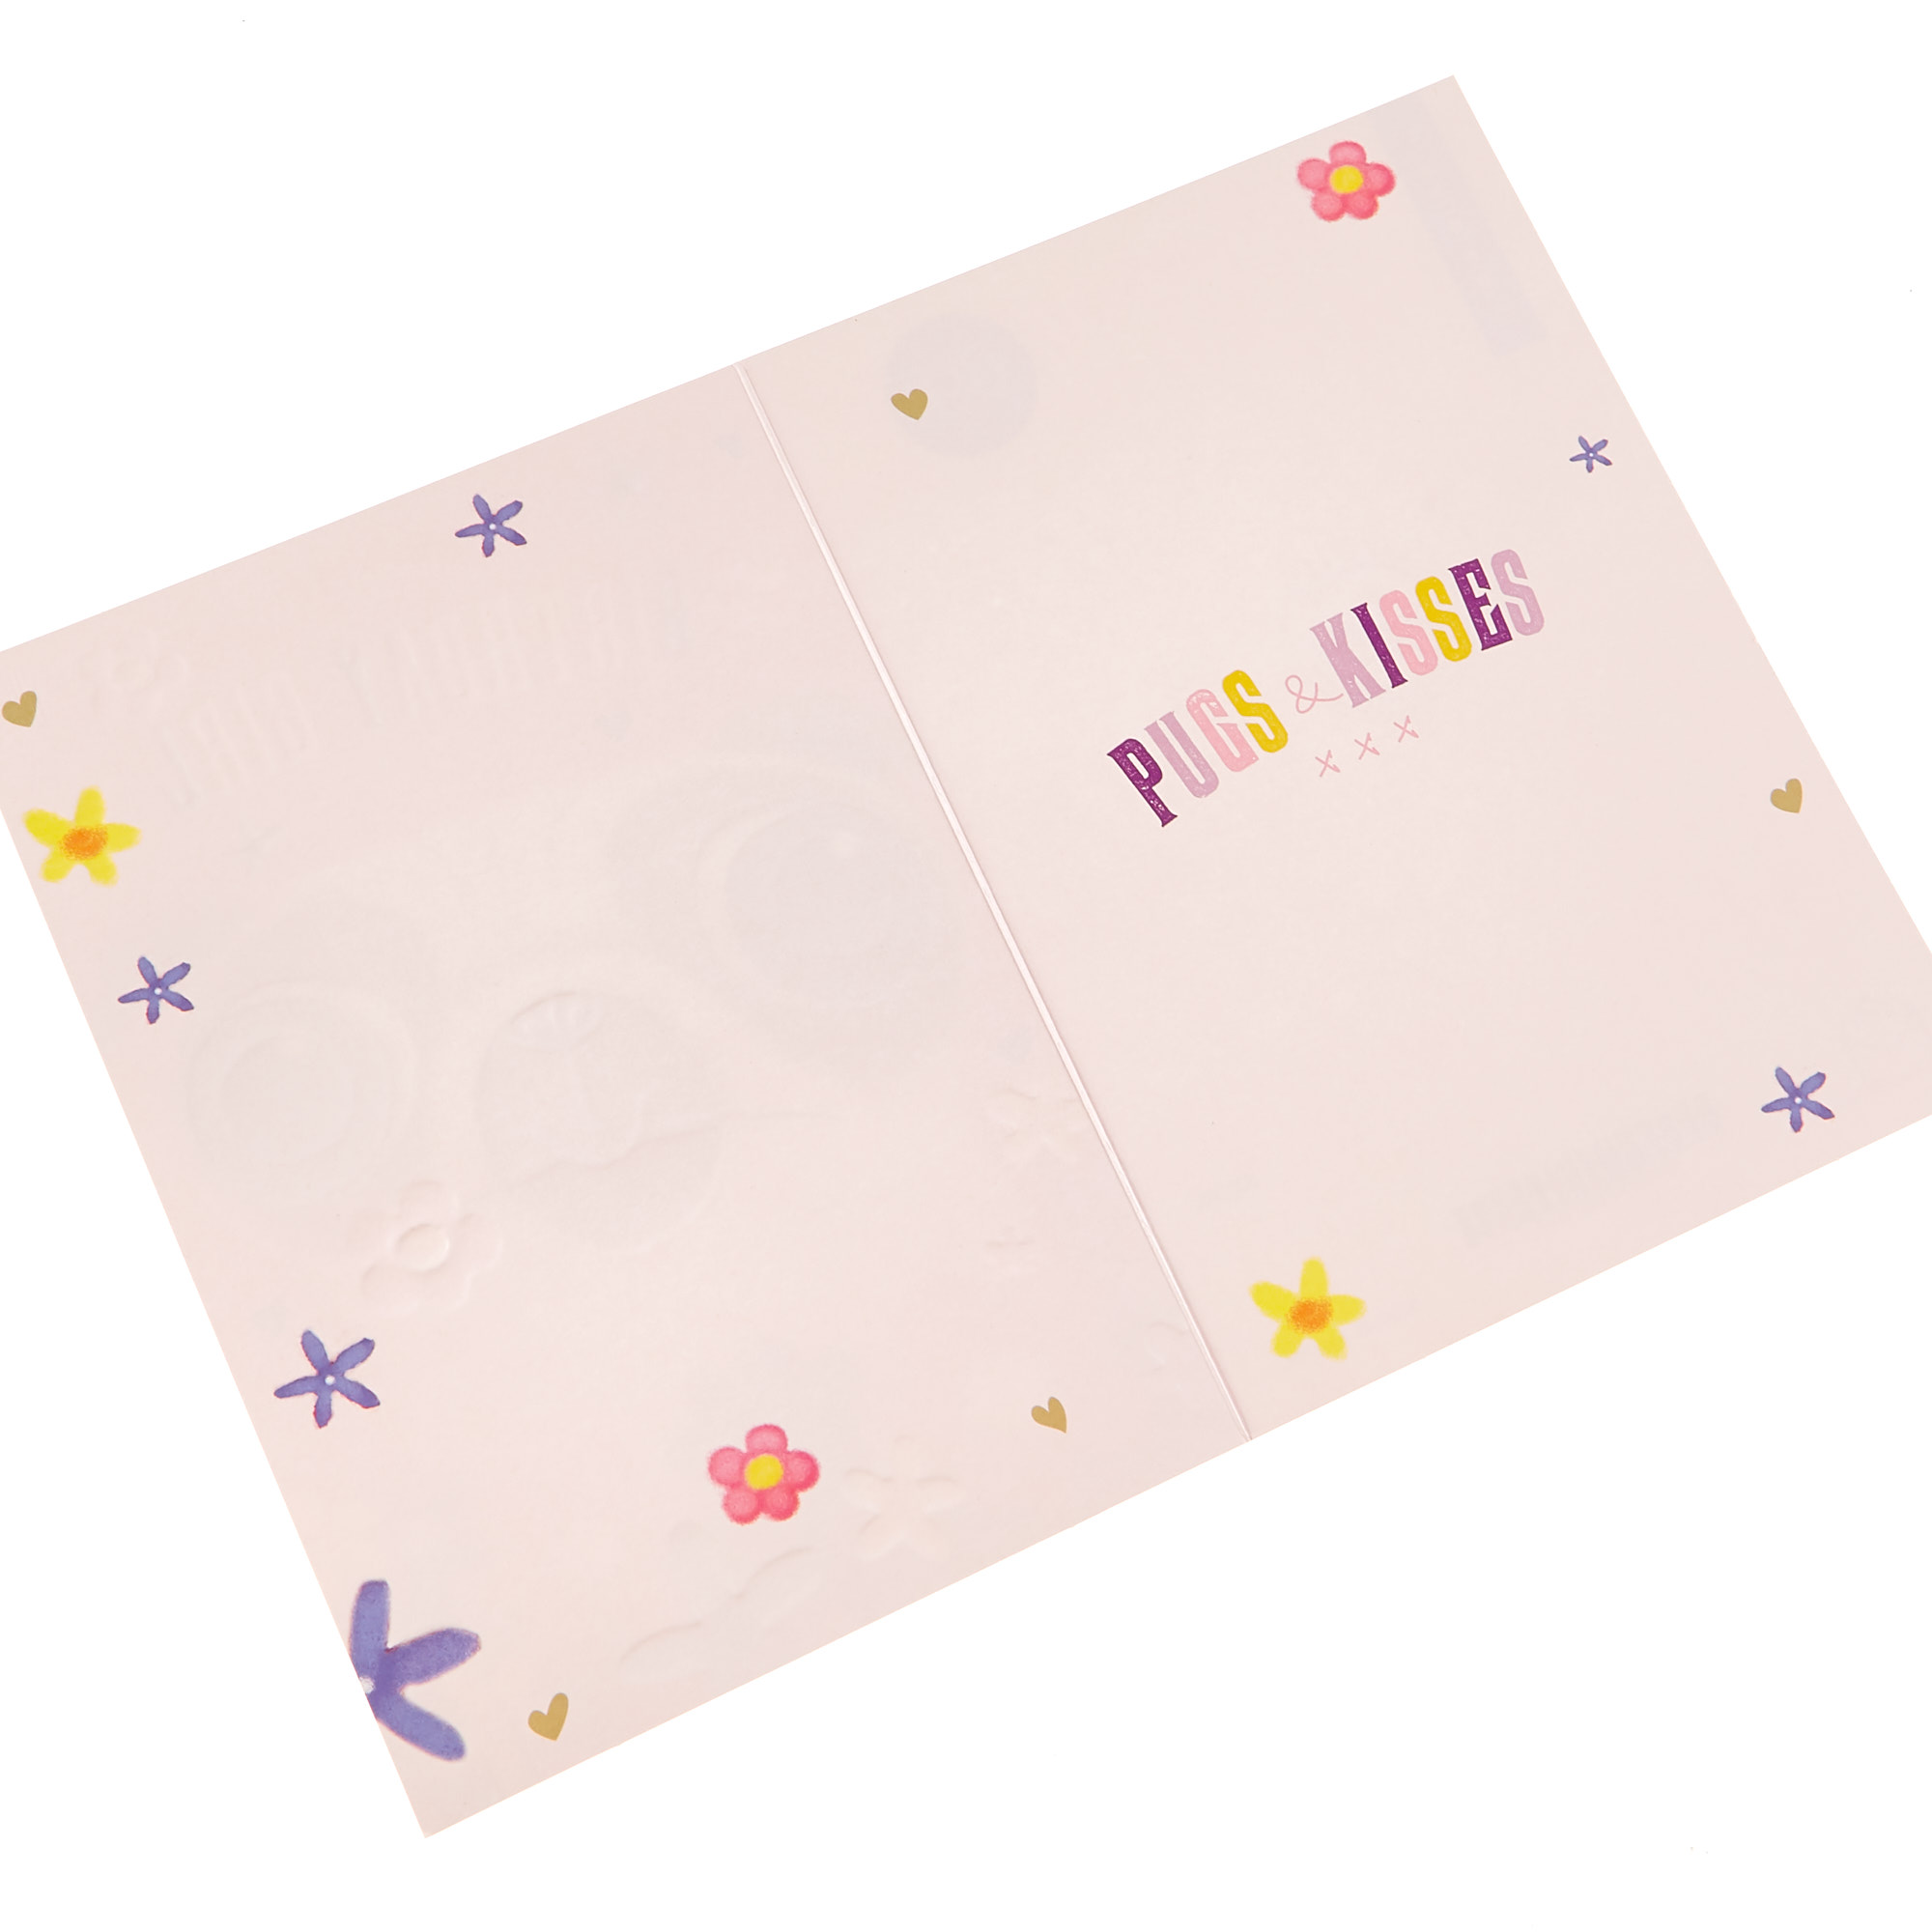 Birthday Cards - Birthday Girl Pug (Pack of 12)